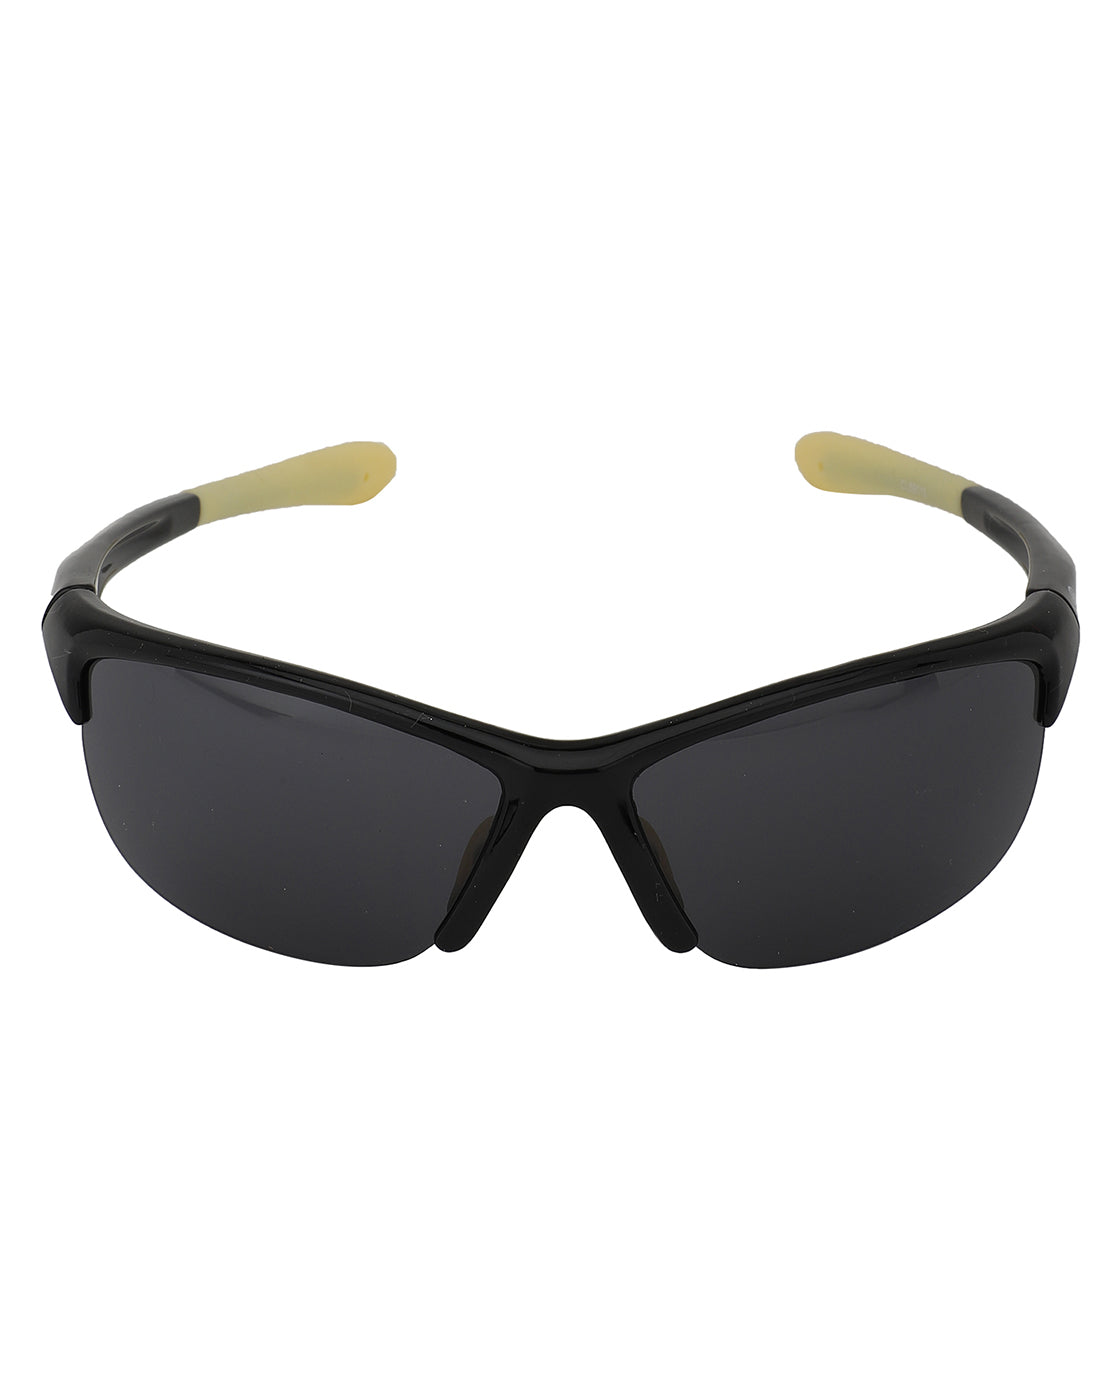 Carlton London Black Lens & Black Sports Sunglasses For Boy